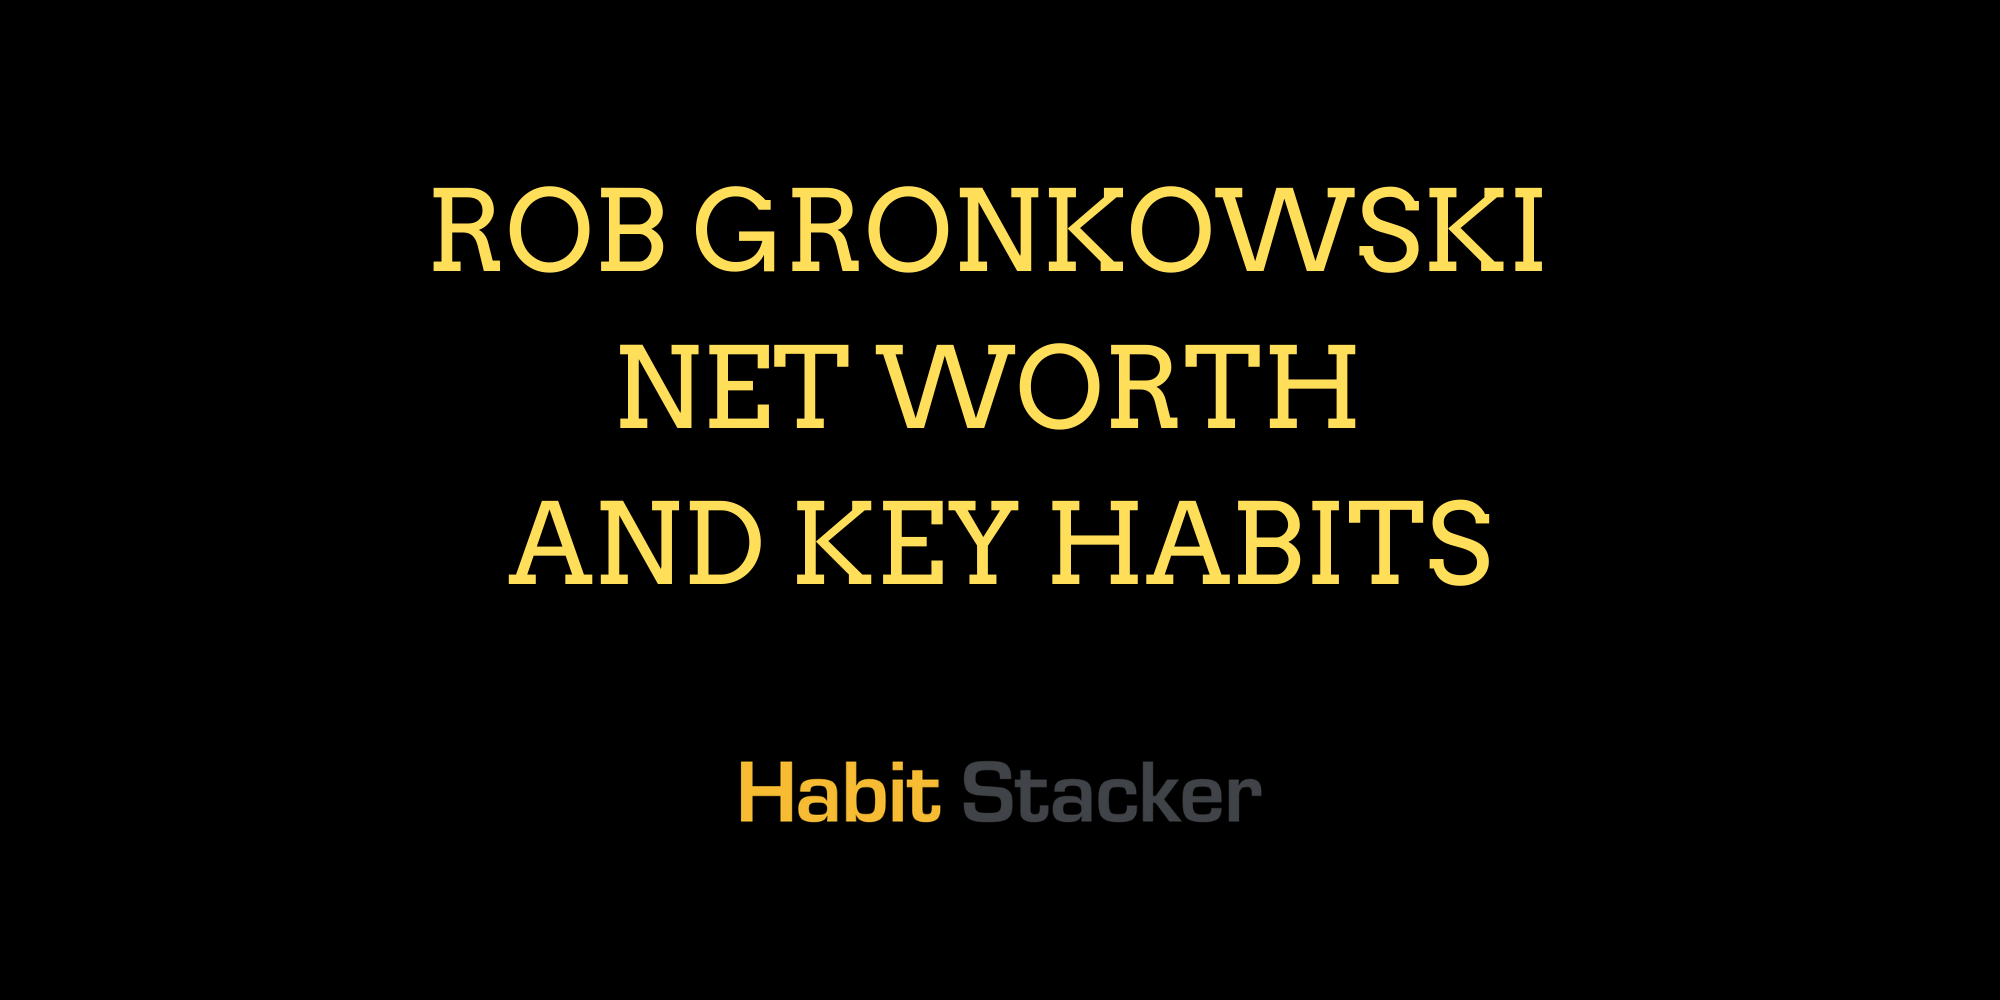 Rob Gronkowski Net Worth And Key Habits